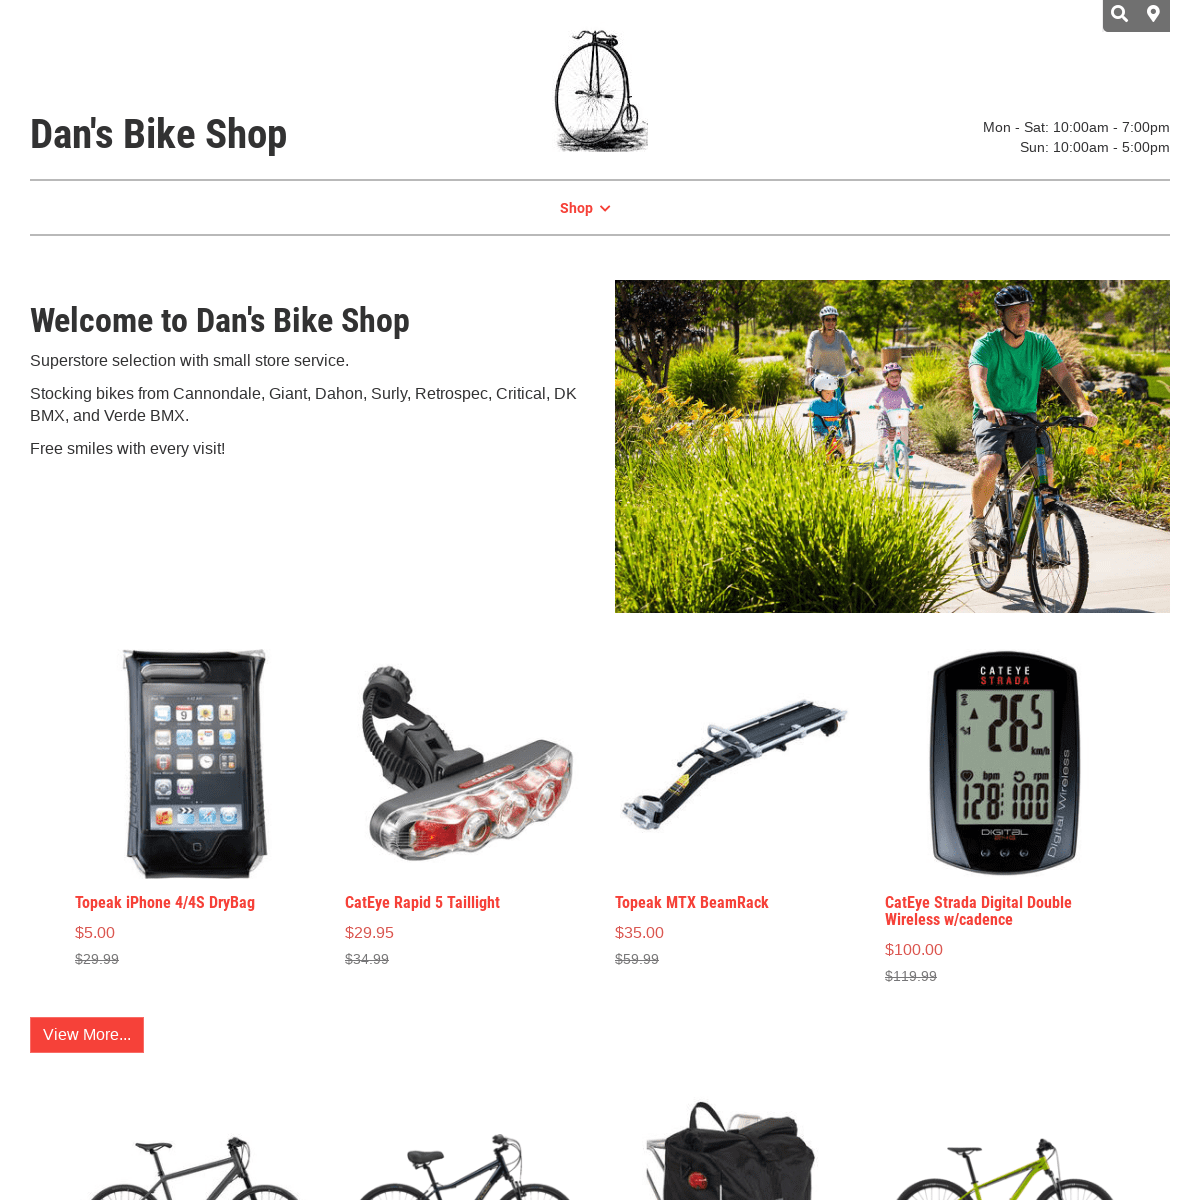 Dan's Bike Shop